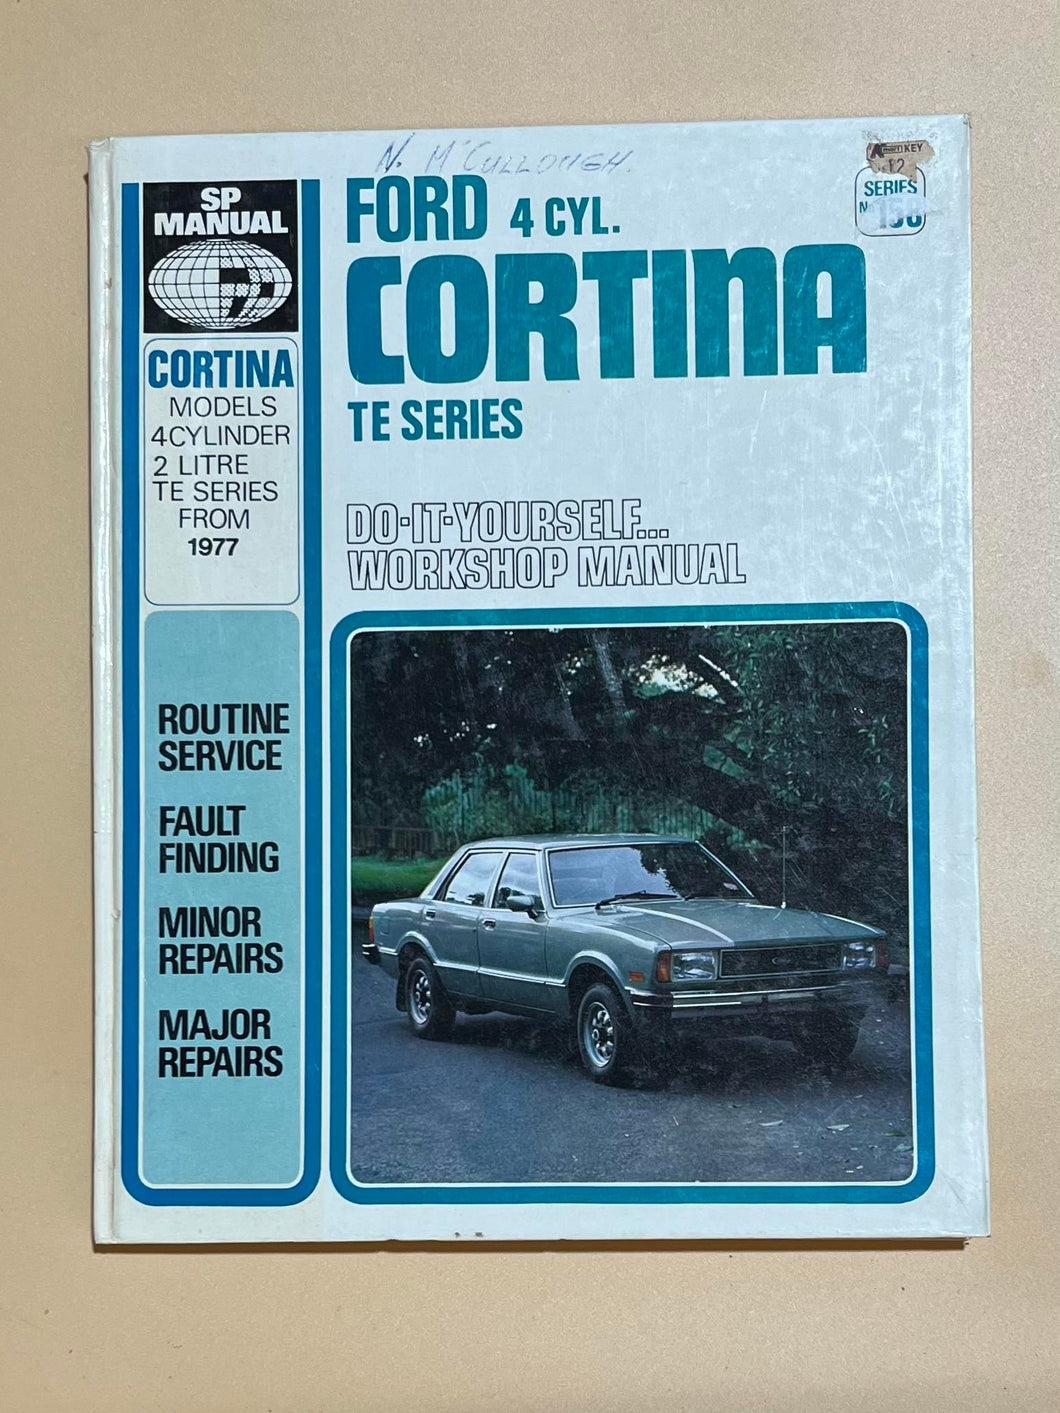 Ford 4 Cylinder Cortina TE Series Workshop Manual